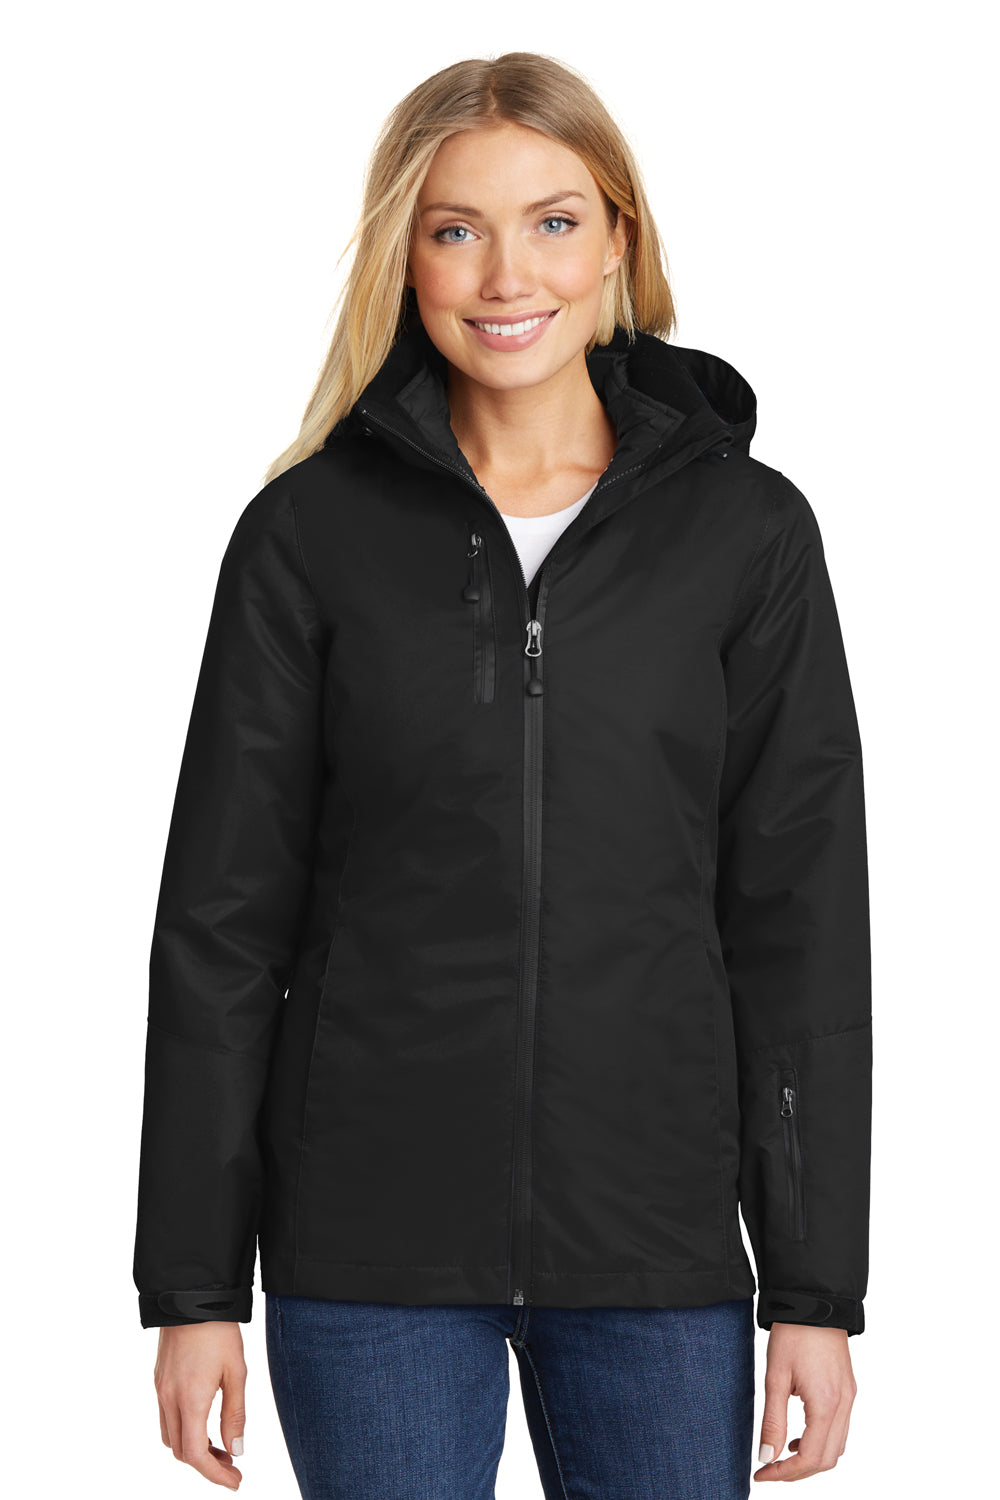 Port Authority L332 Womens Vortex 3-in-1 Waterproof Full Zip Hooded Jacket Black Front